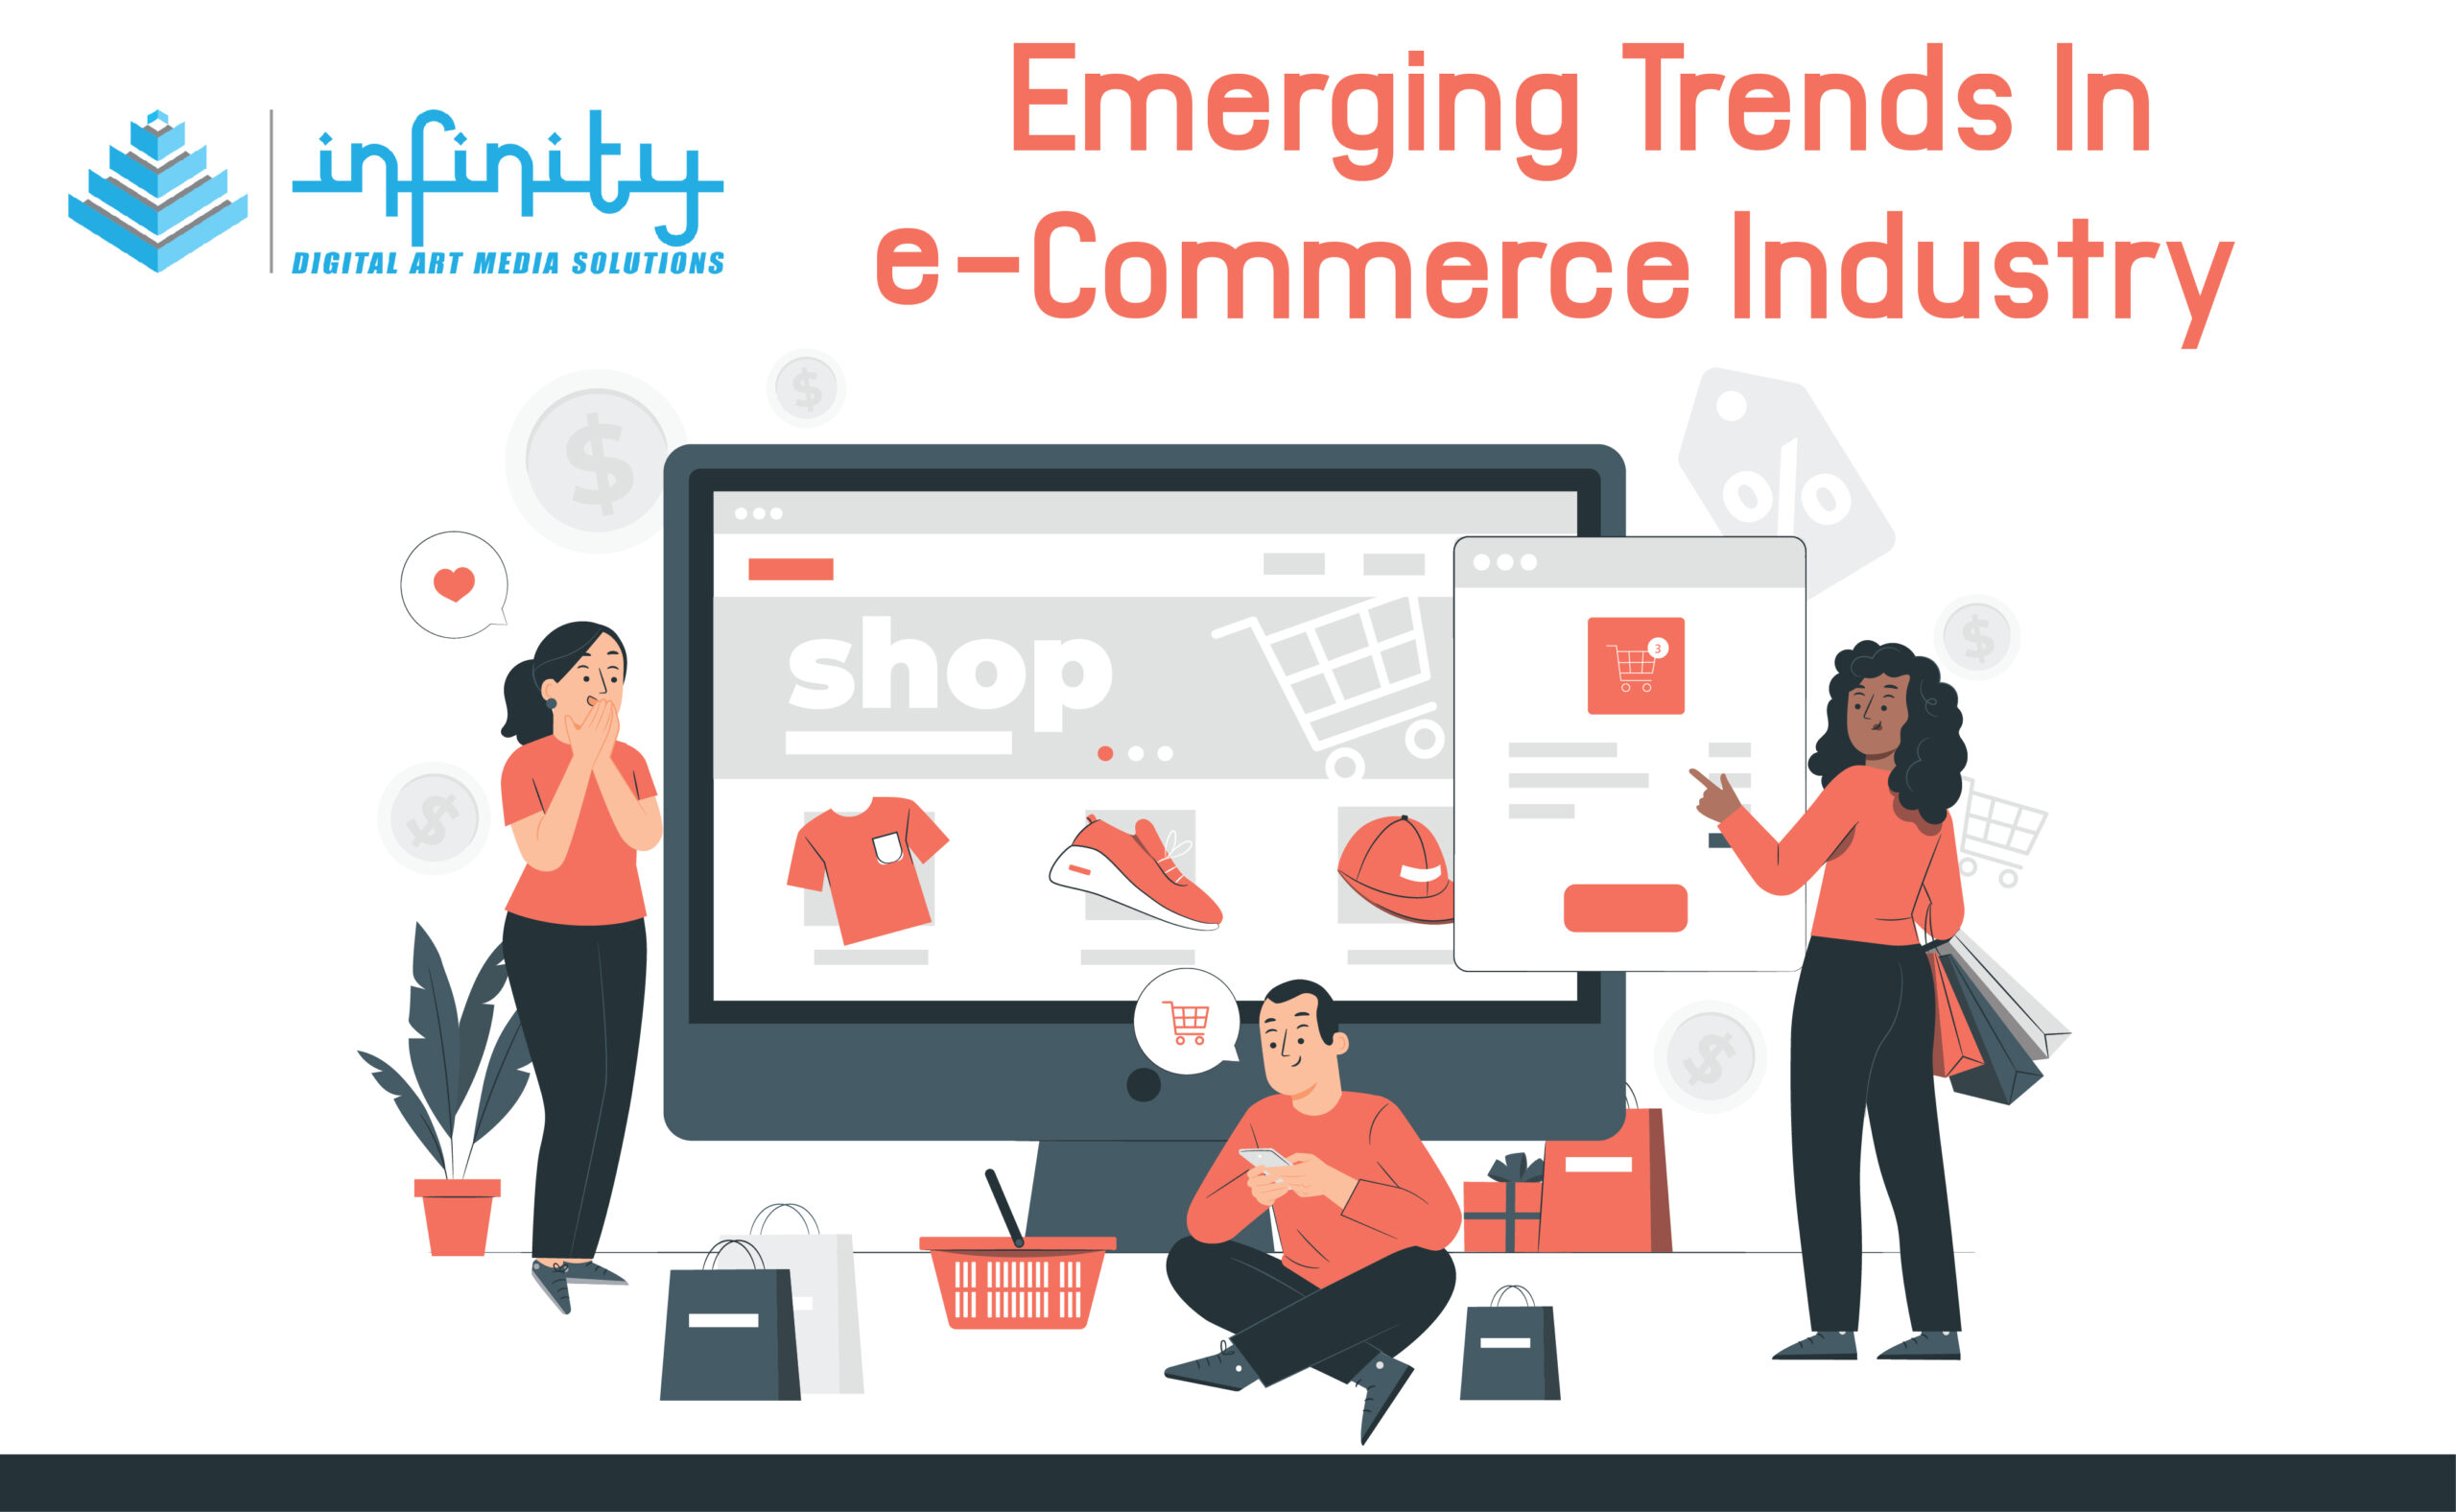 e-commerce industry